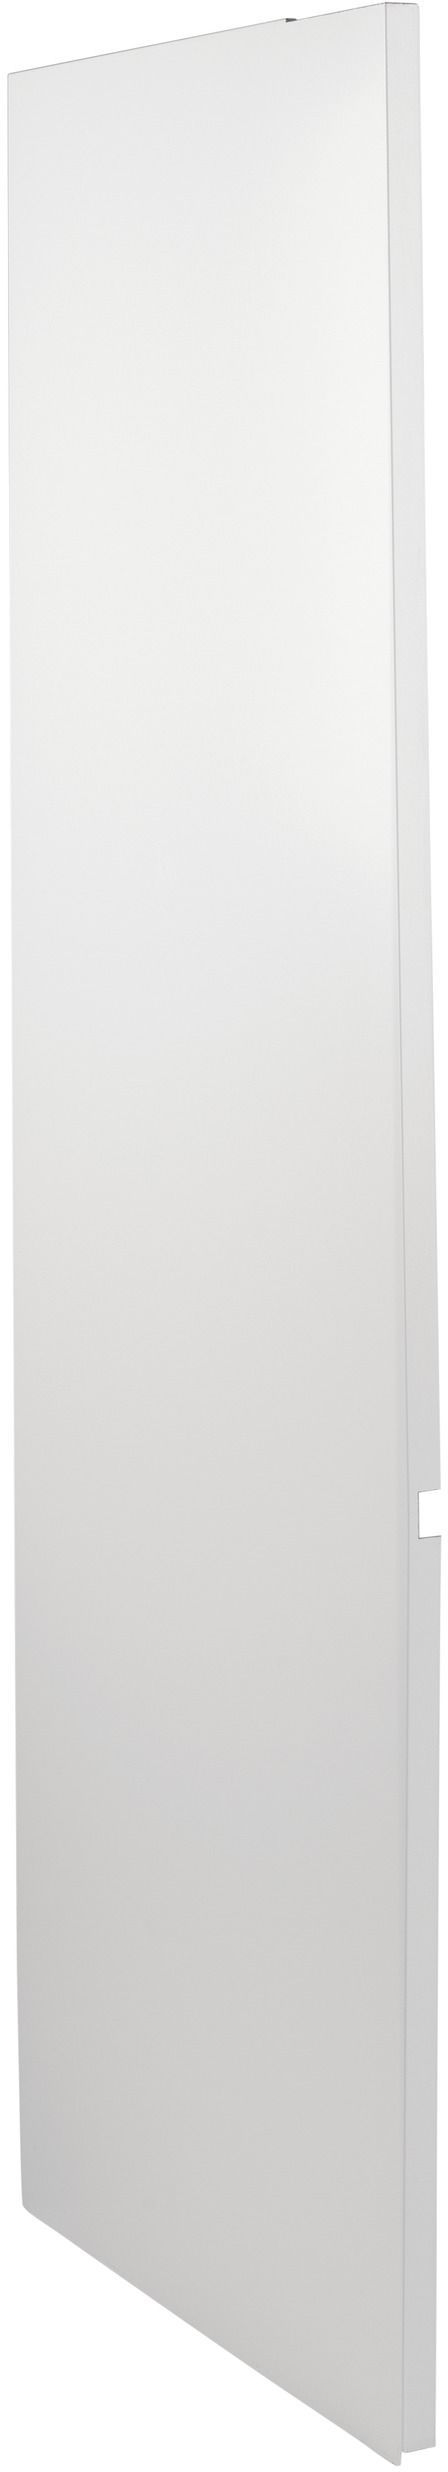 Café™ Matte White Refrigeration Side Panel, Counter Depth-Left